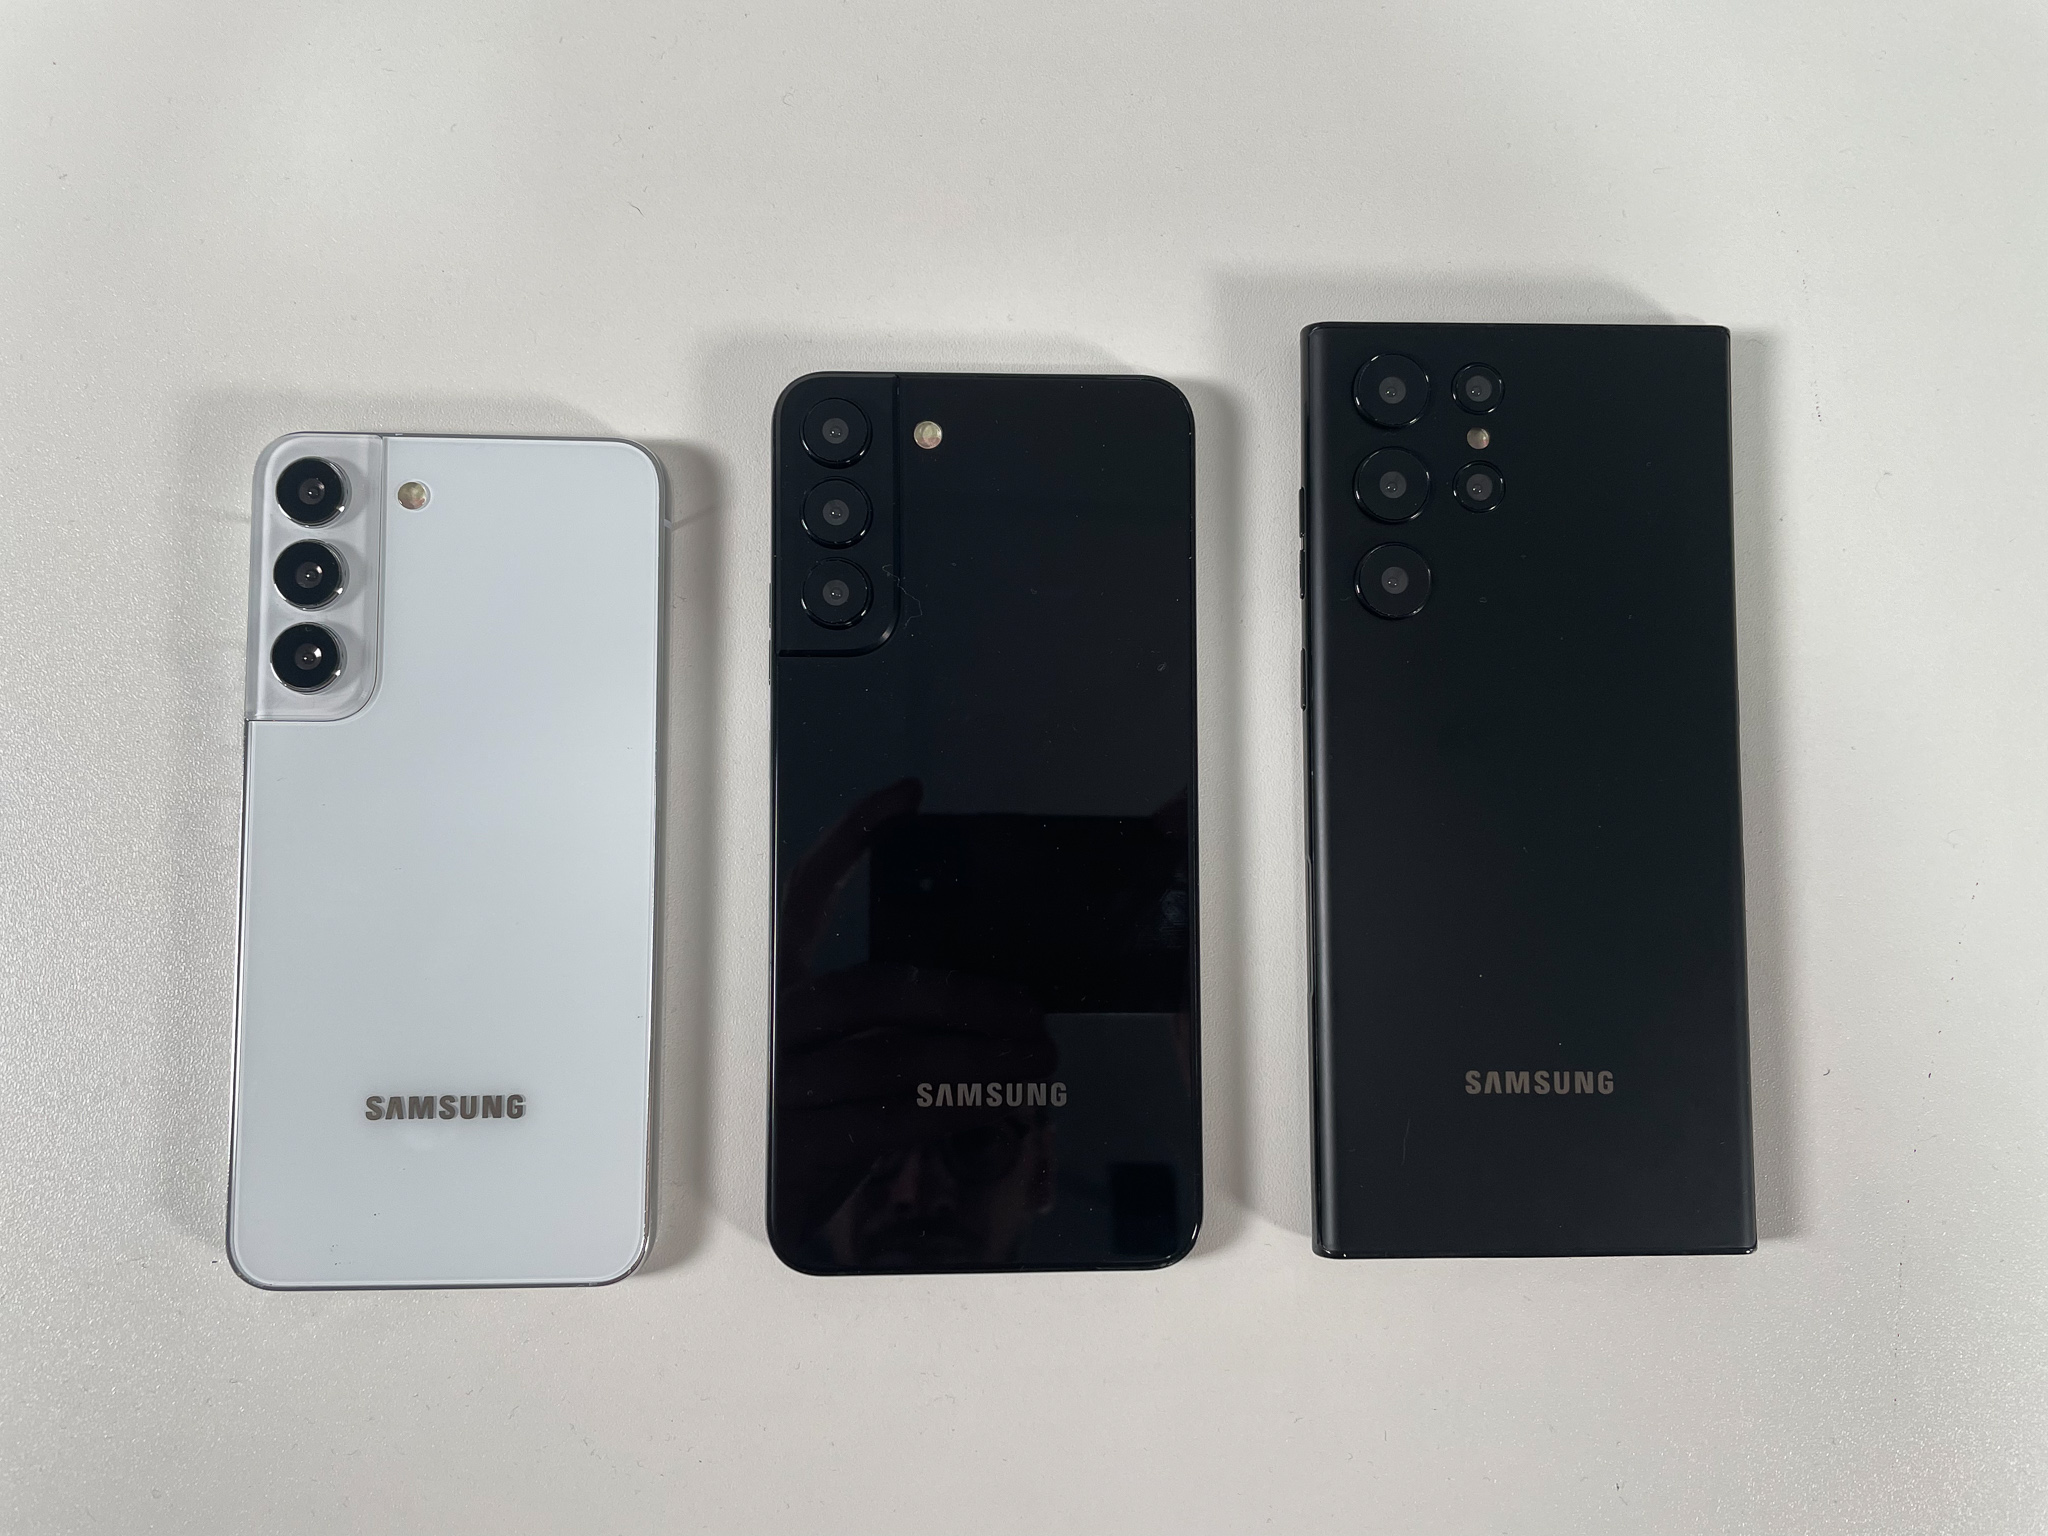 Samsung Galaxy S22 Ultra vs Samsung Galaxy S21 Ultra: Should you